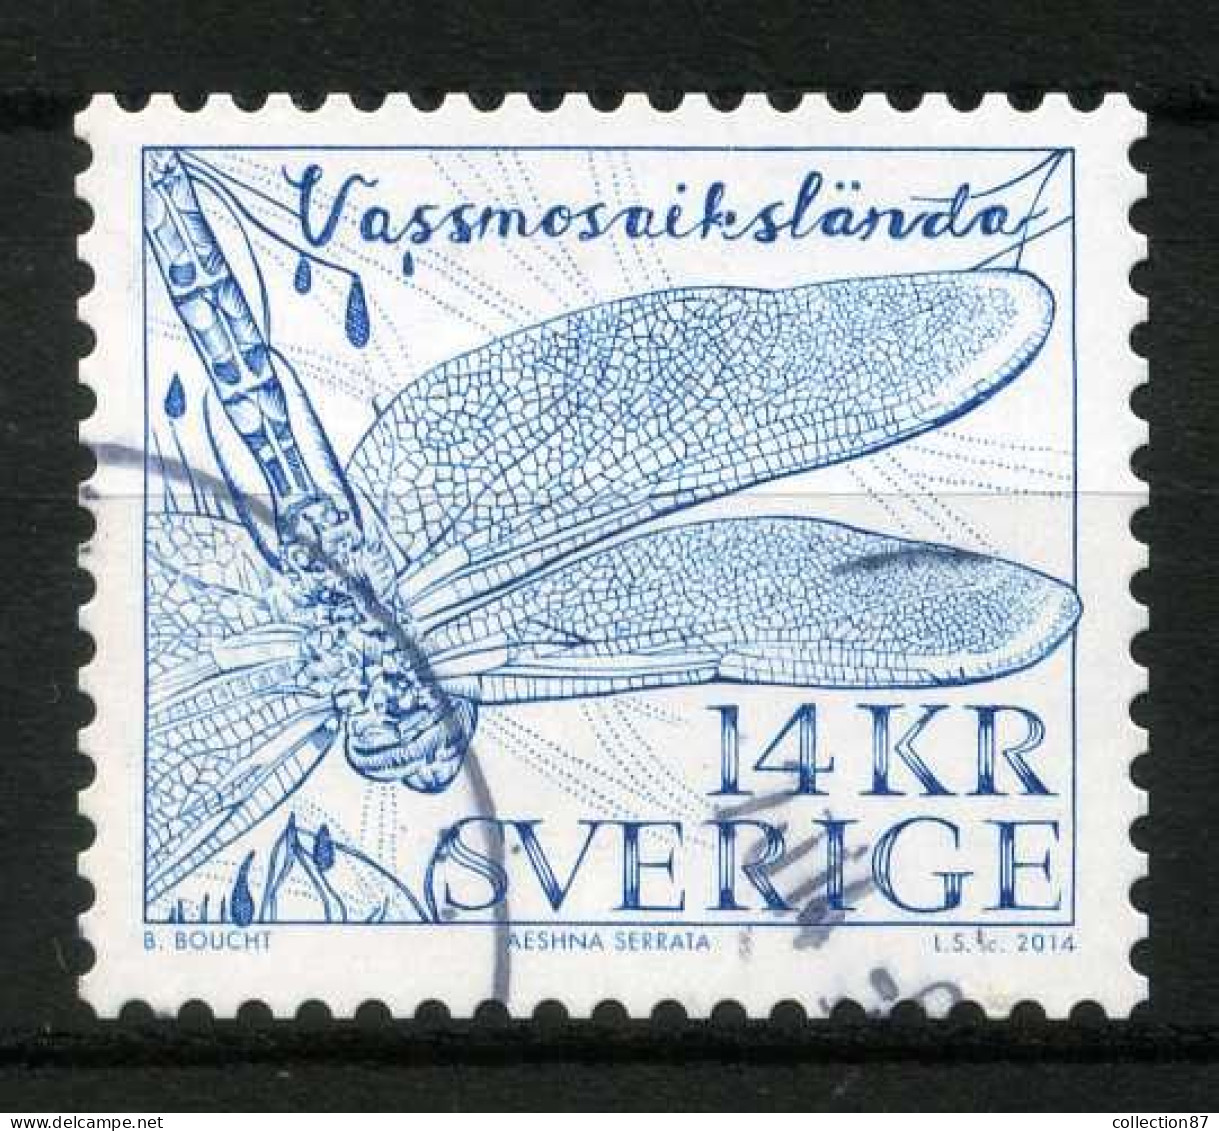 Réf 77 < -- SWEDEN 2014 < Yvert N° 2967 Ø Used -- > Insectes Aeshna Serrata - Usados